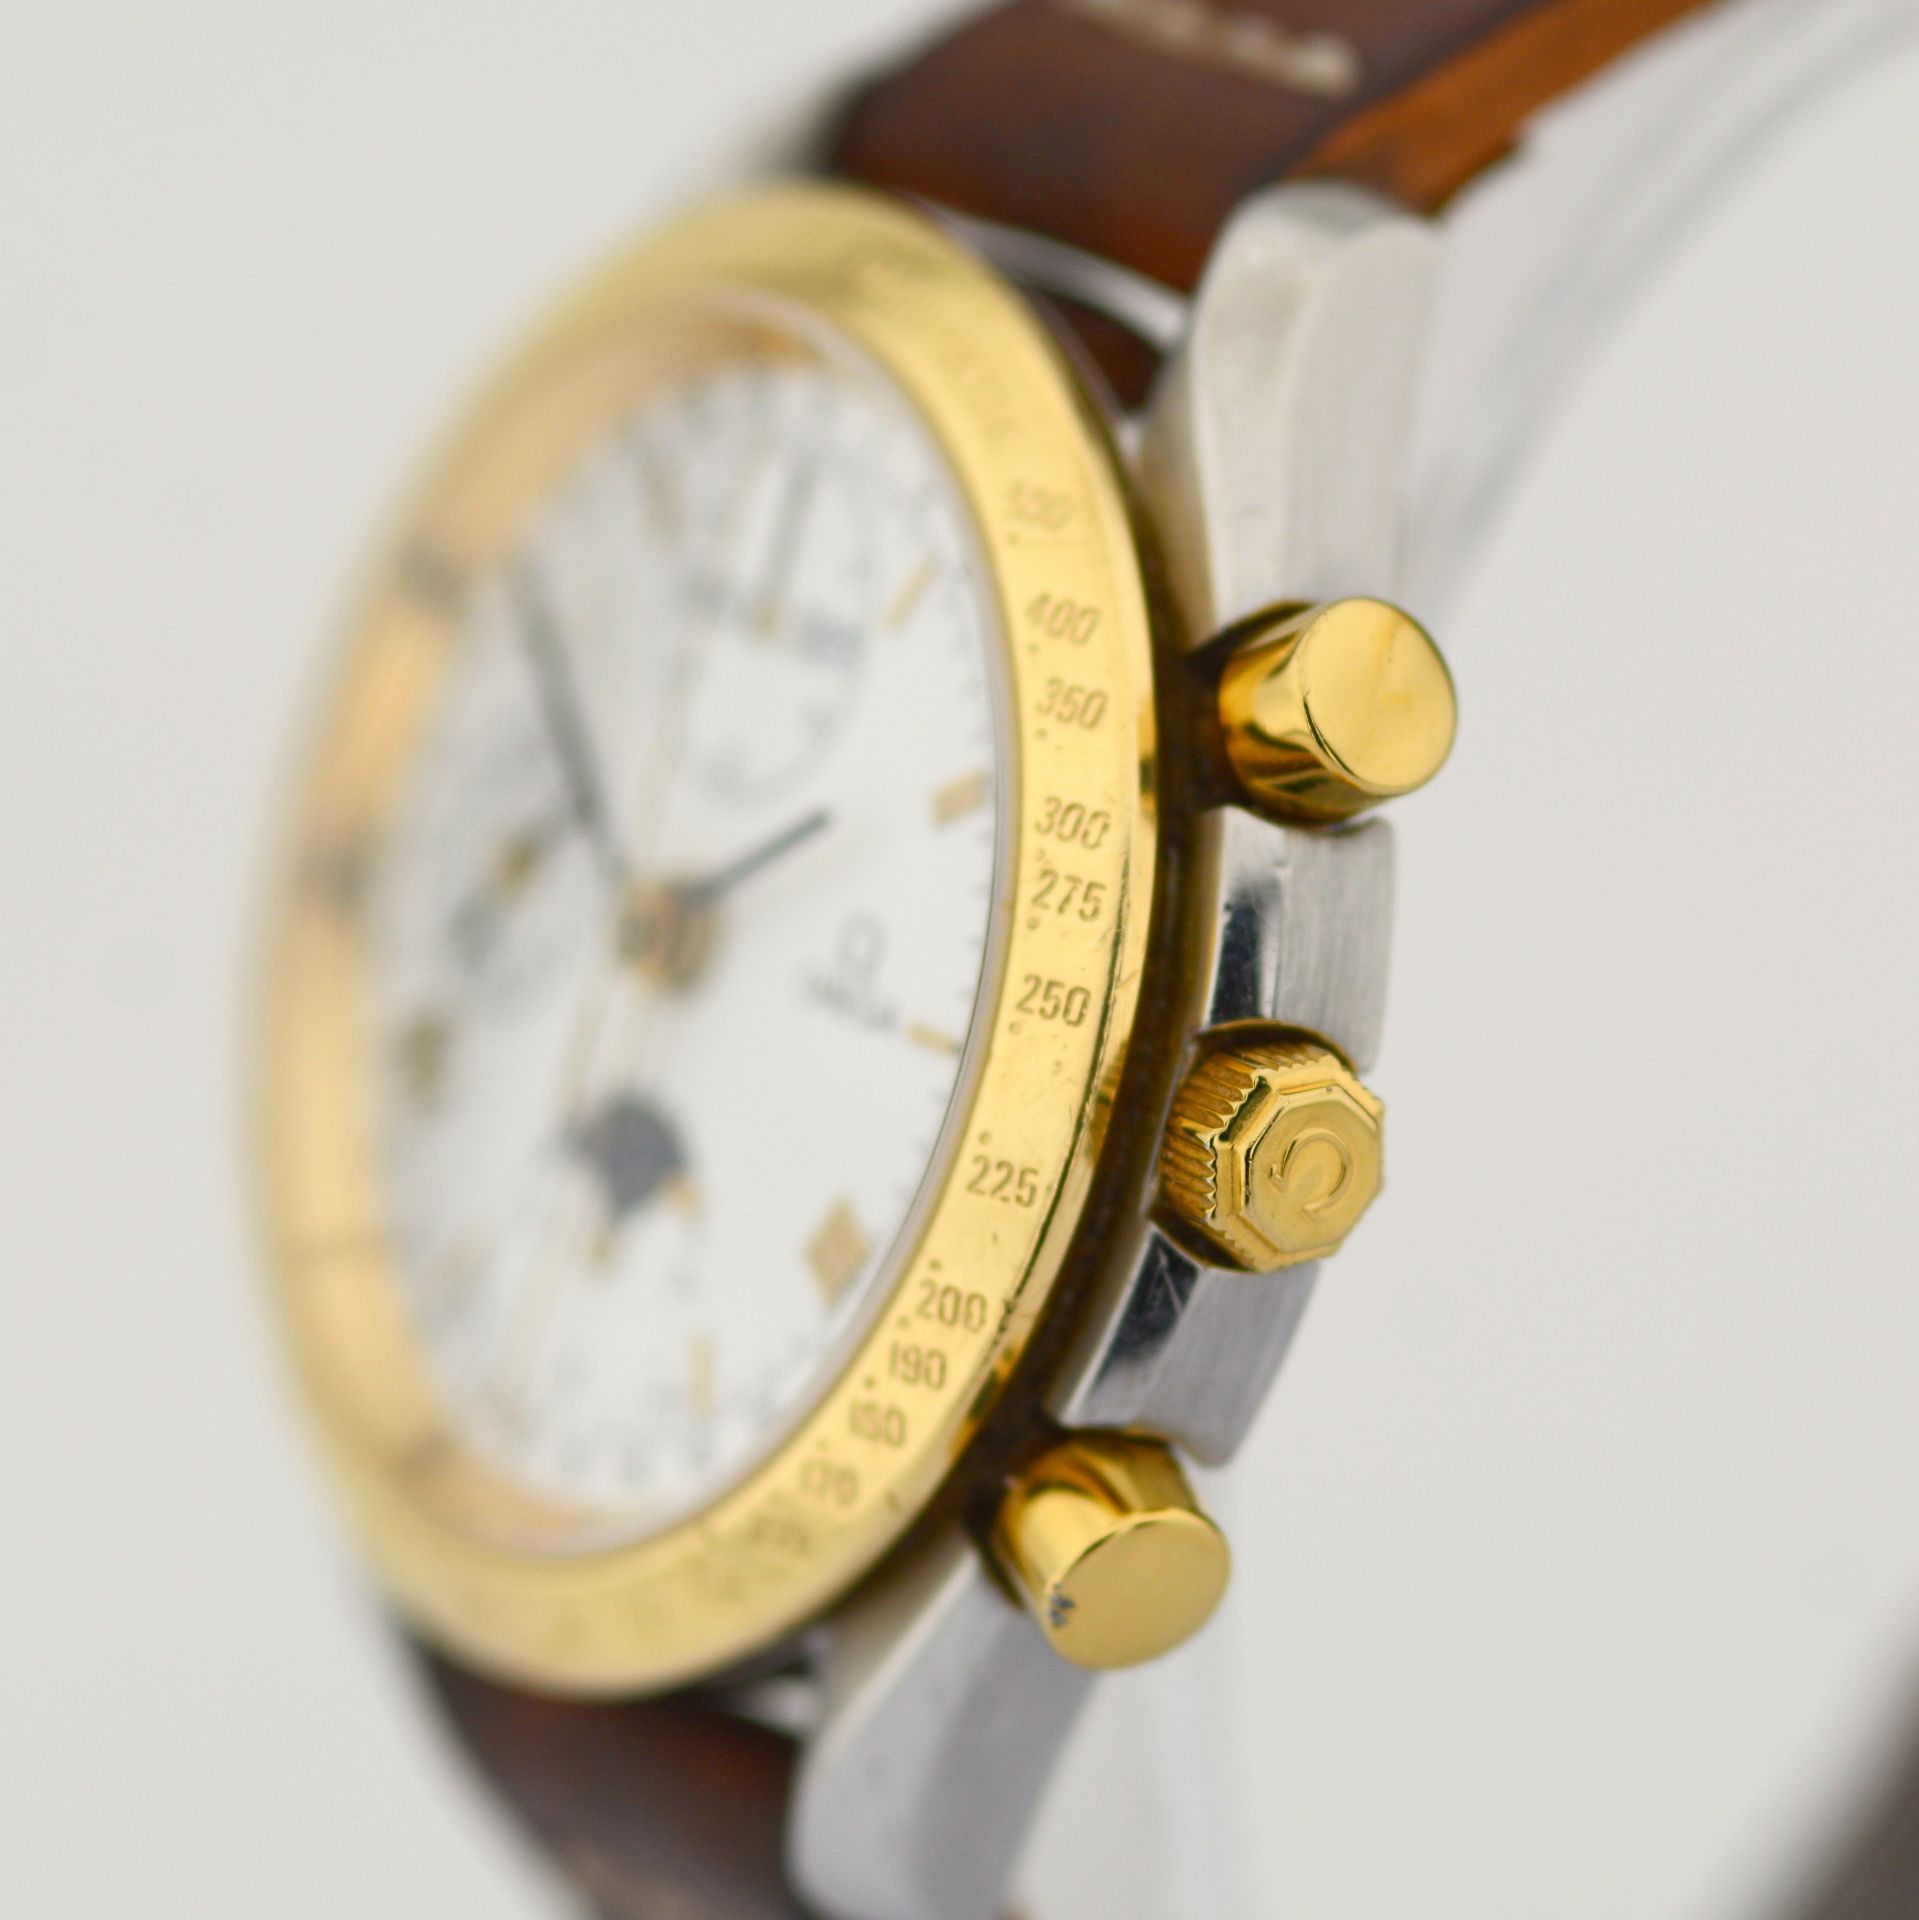 Omega / Speedmaster Triple Calendar Moonphase Chronograph - Gentlmen's Steel Wrist Watch - Image 2 of 9